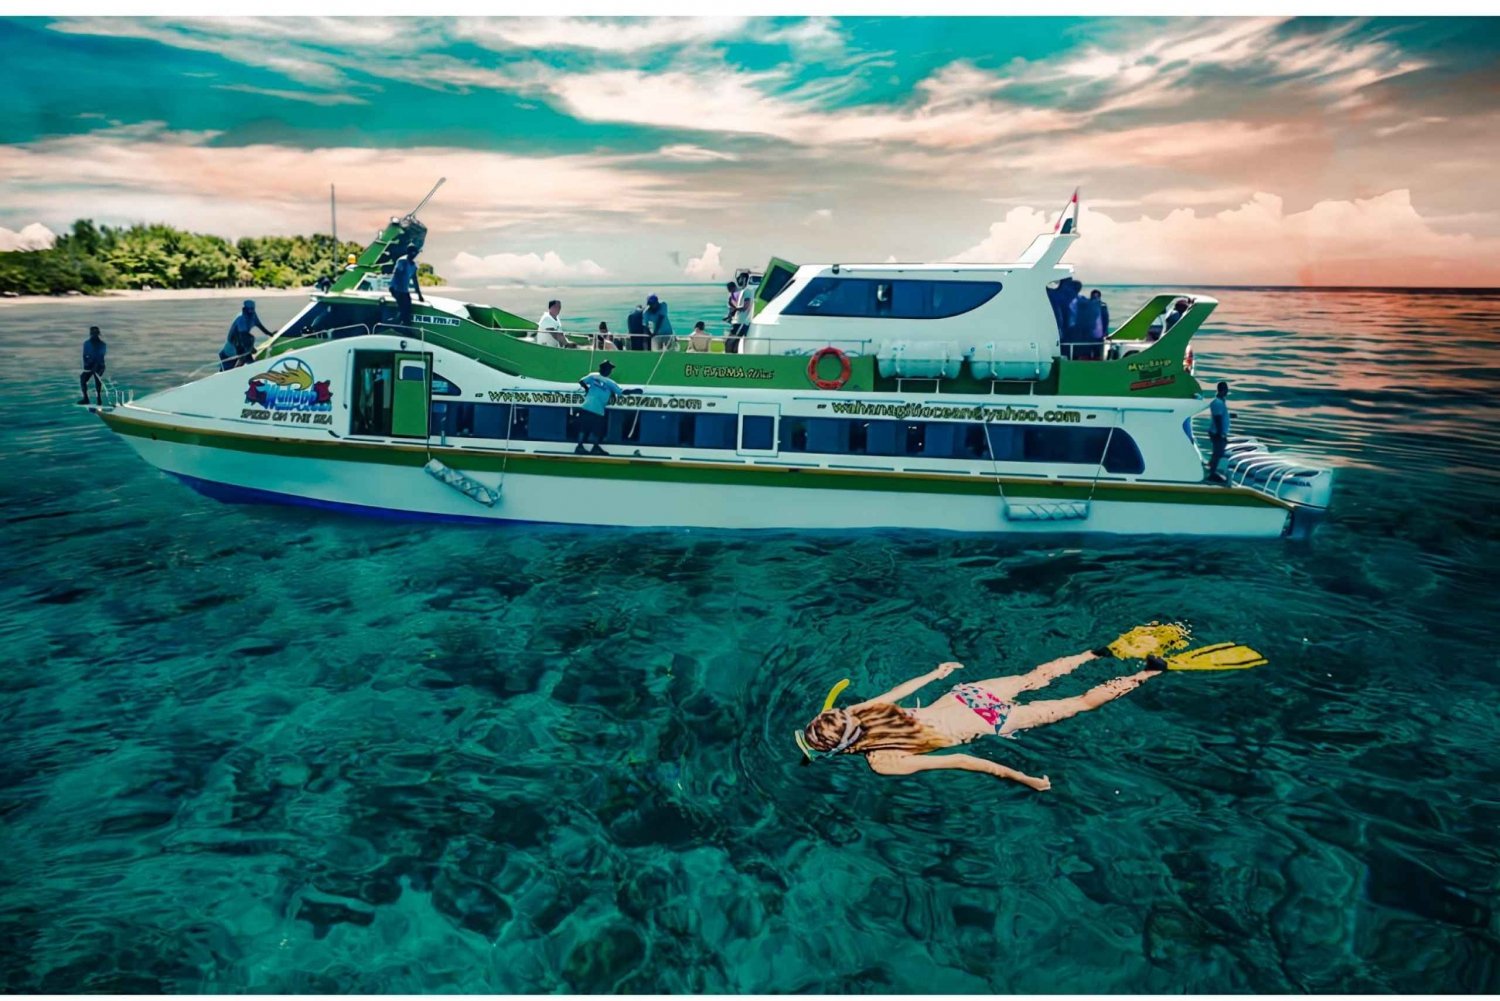 Biljett Fastboat Bali - Gili Trawangan - Lombok - Bali